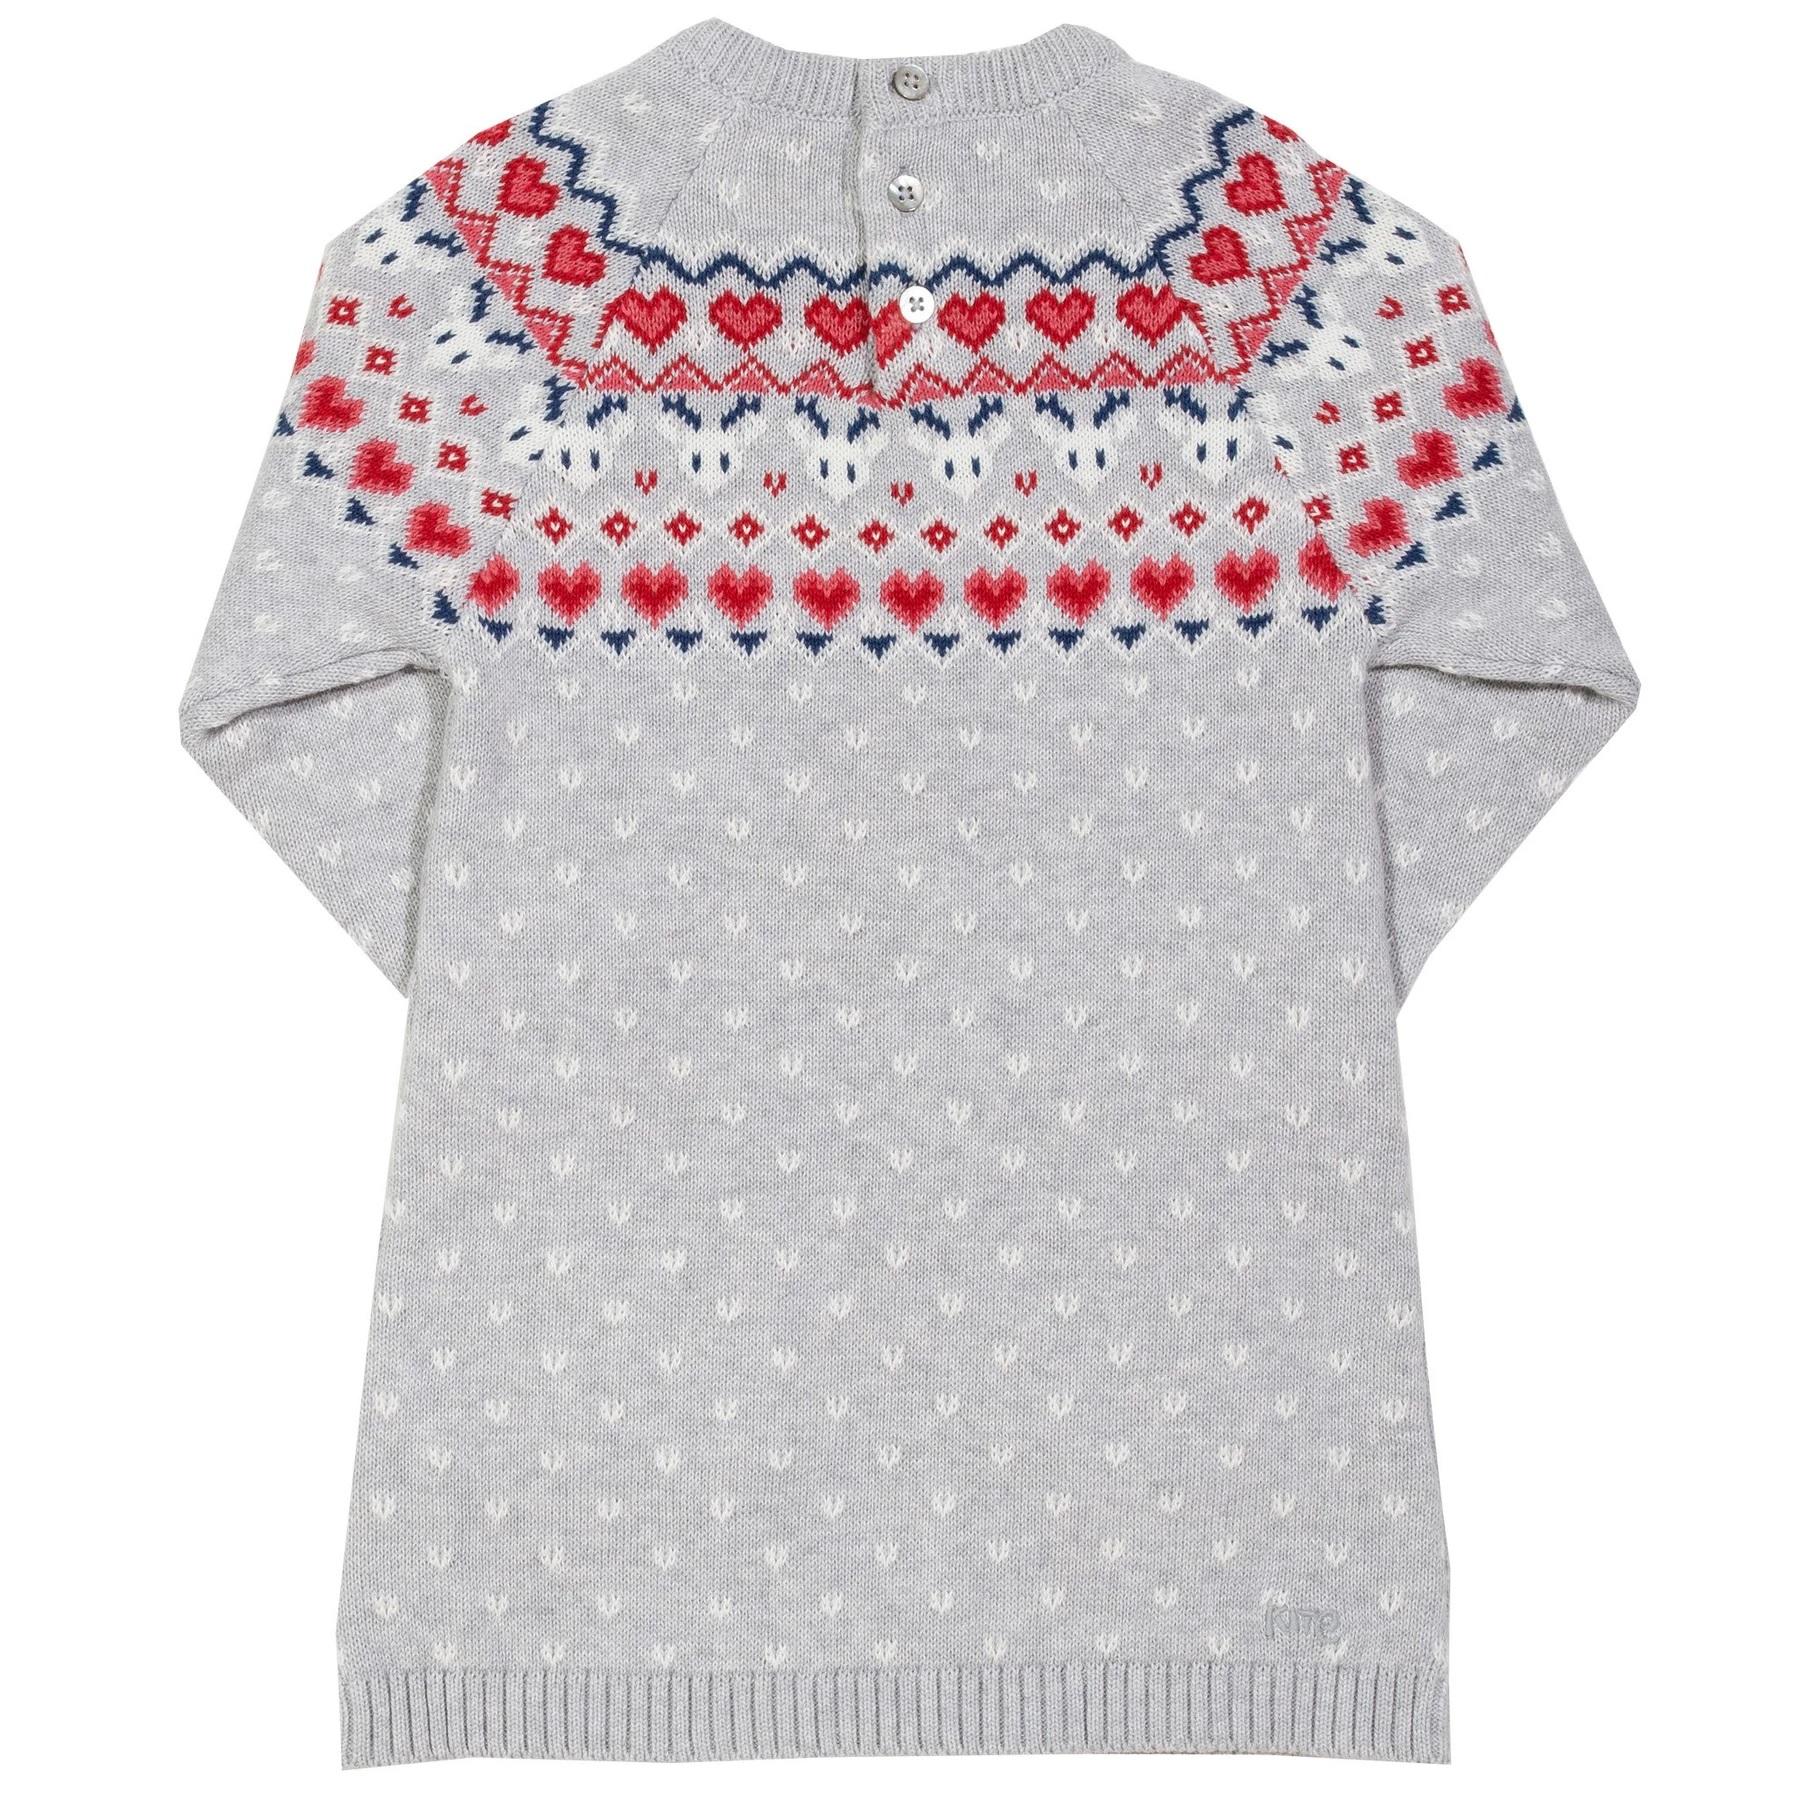 Kite Clothing Nordic Heart Knit Dress back